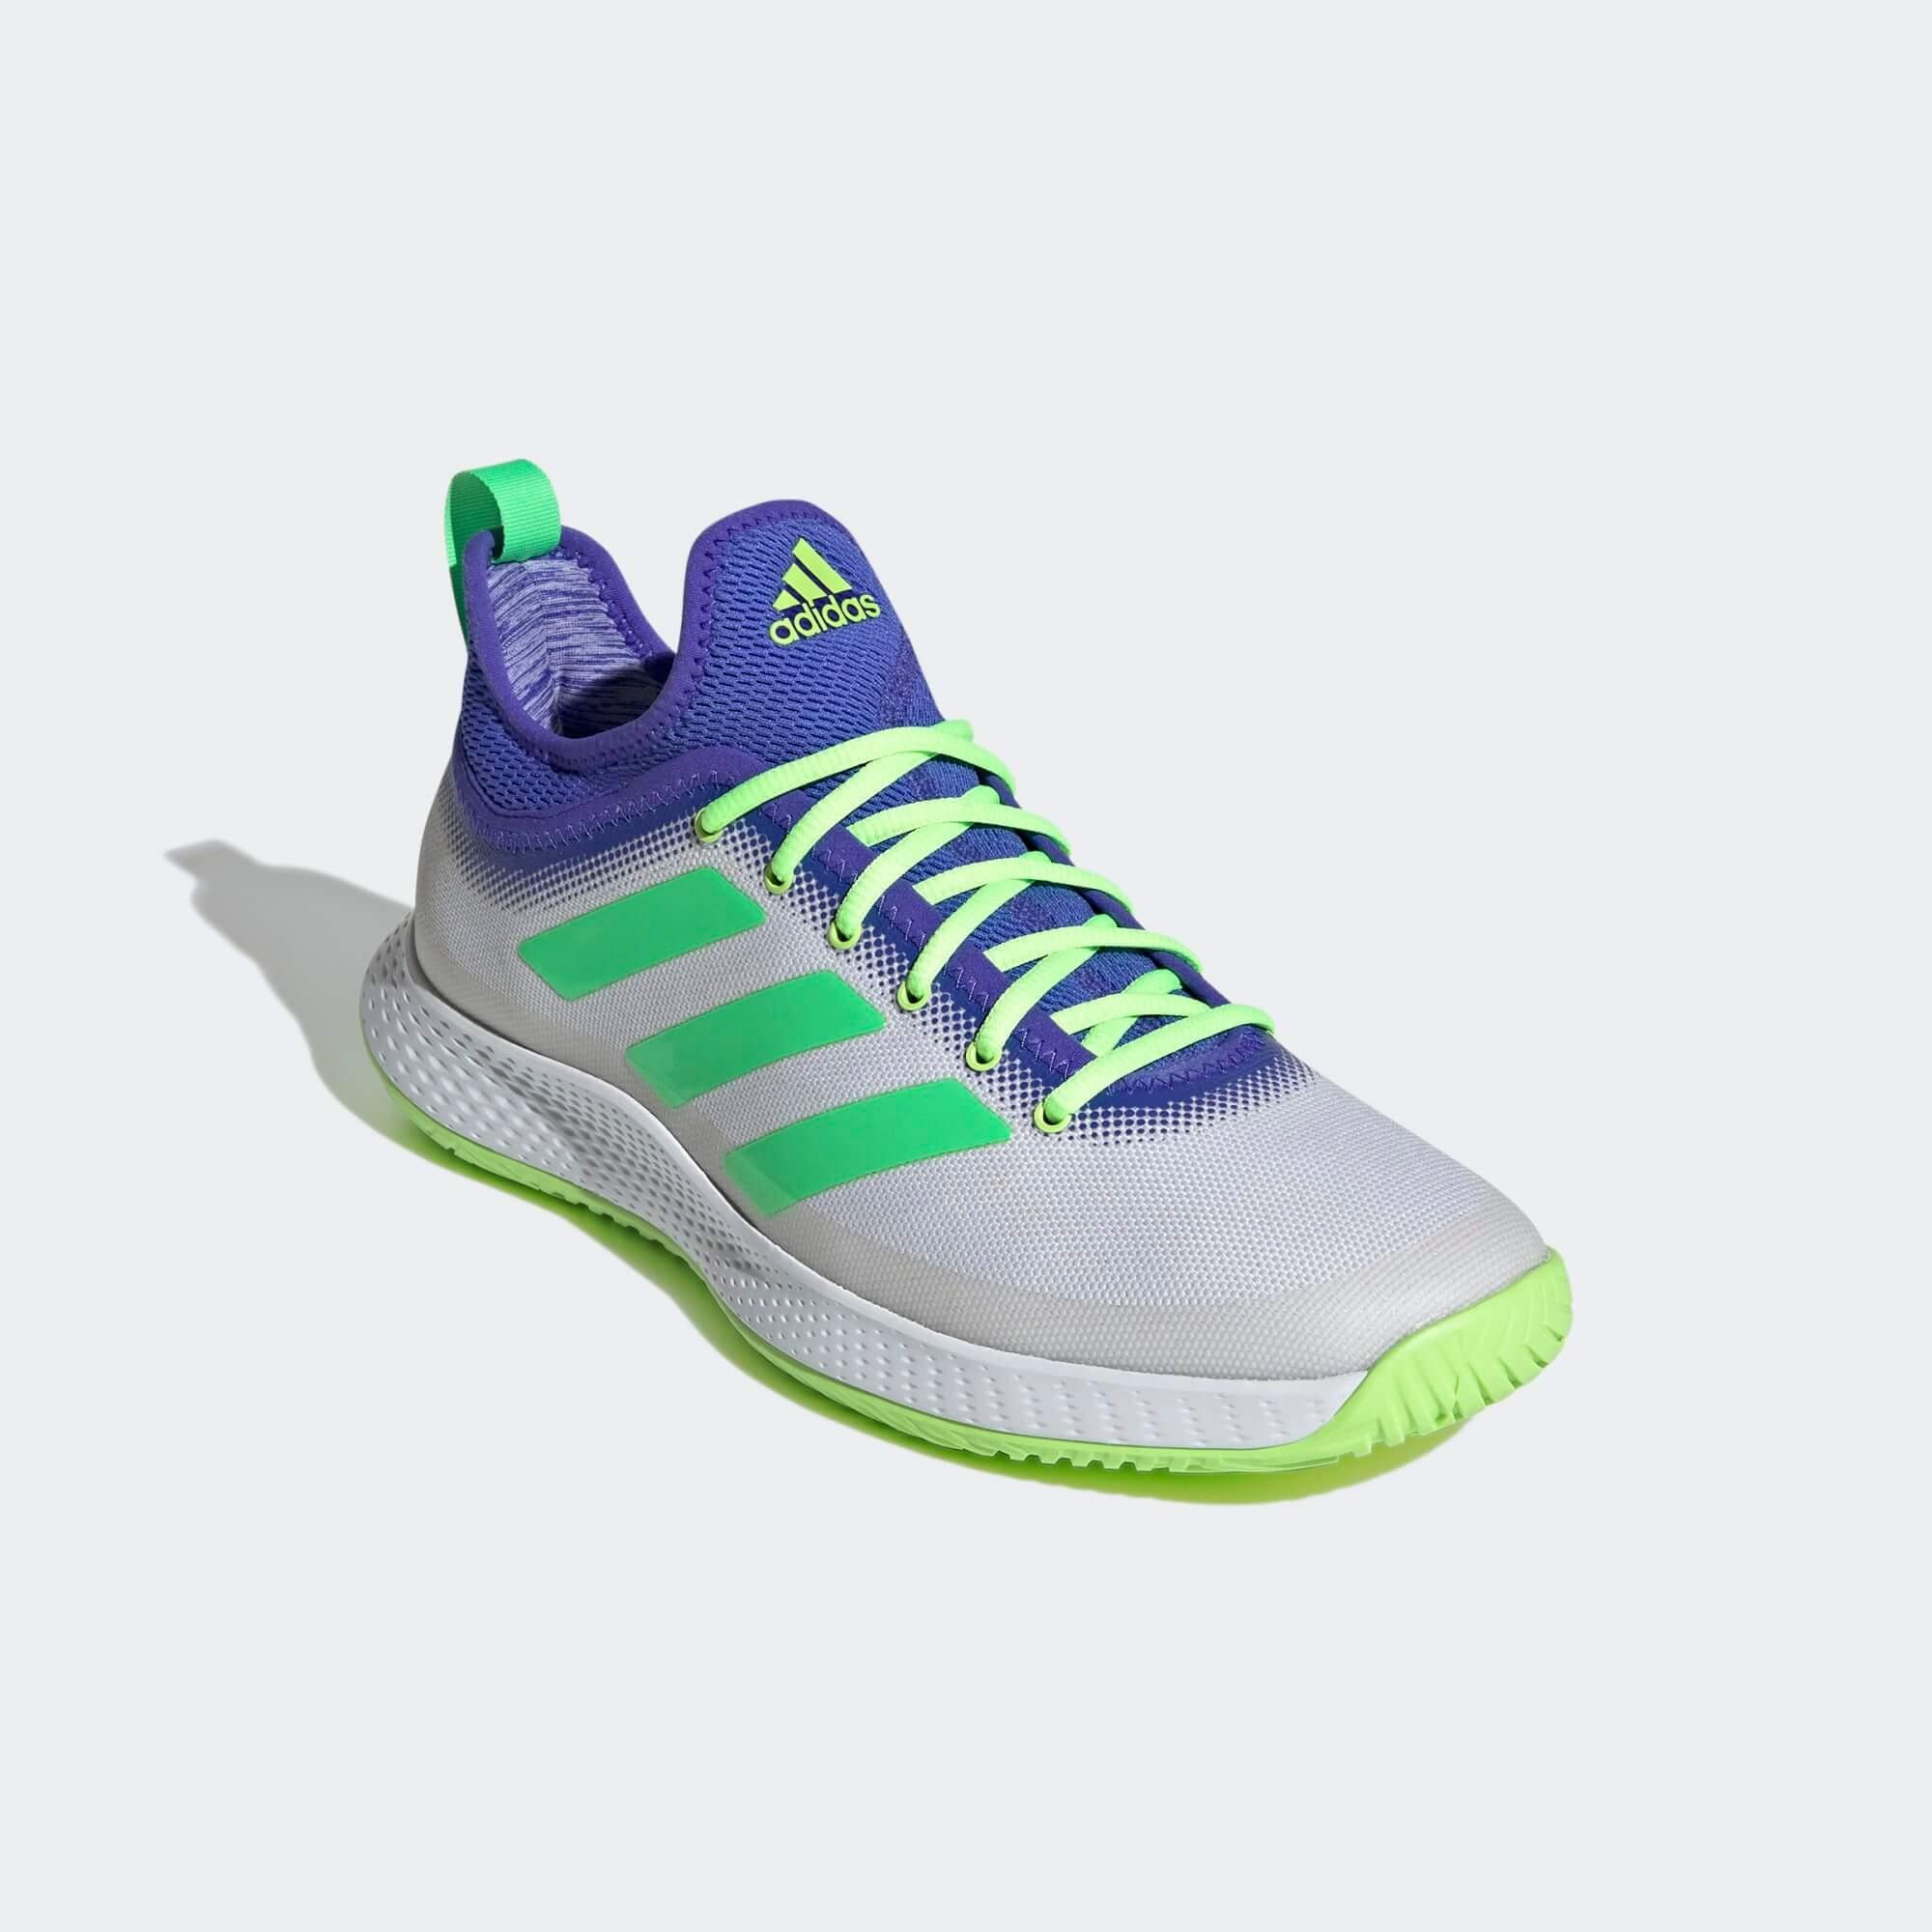 Adidas Mens Defiant Generation Tennis Shoes - White/Green/Blue ...